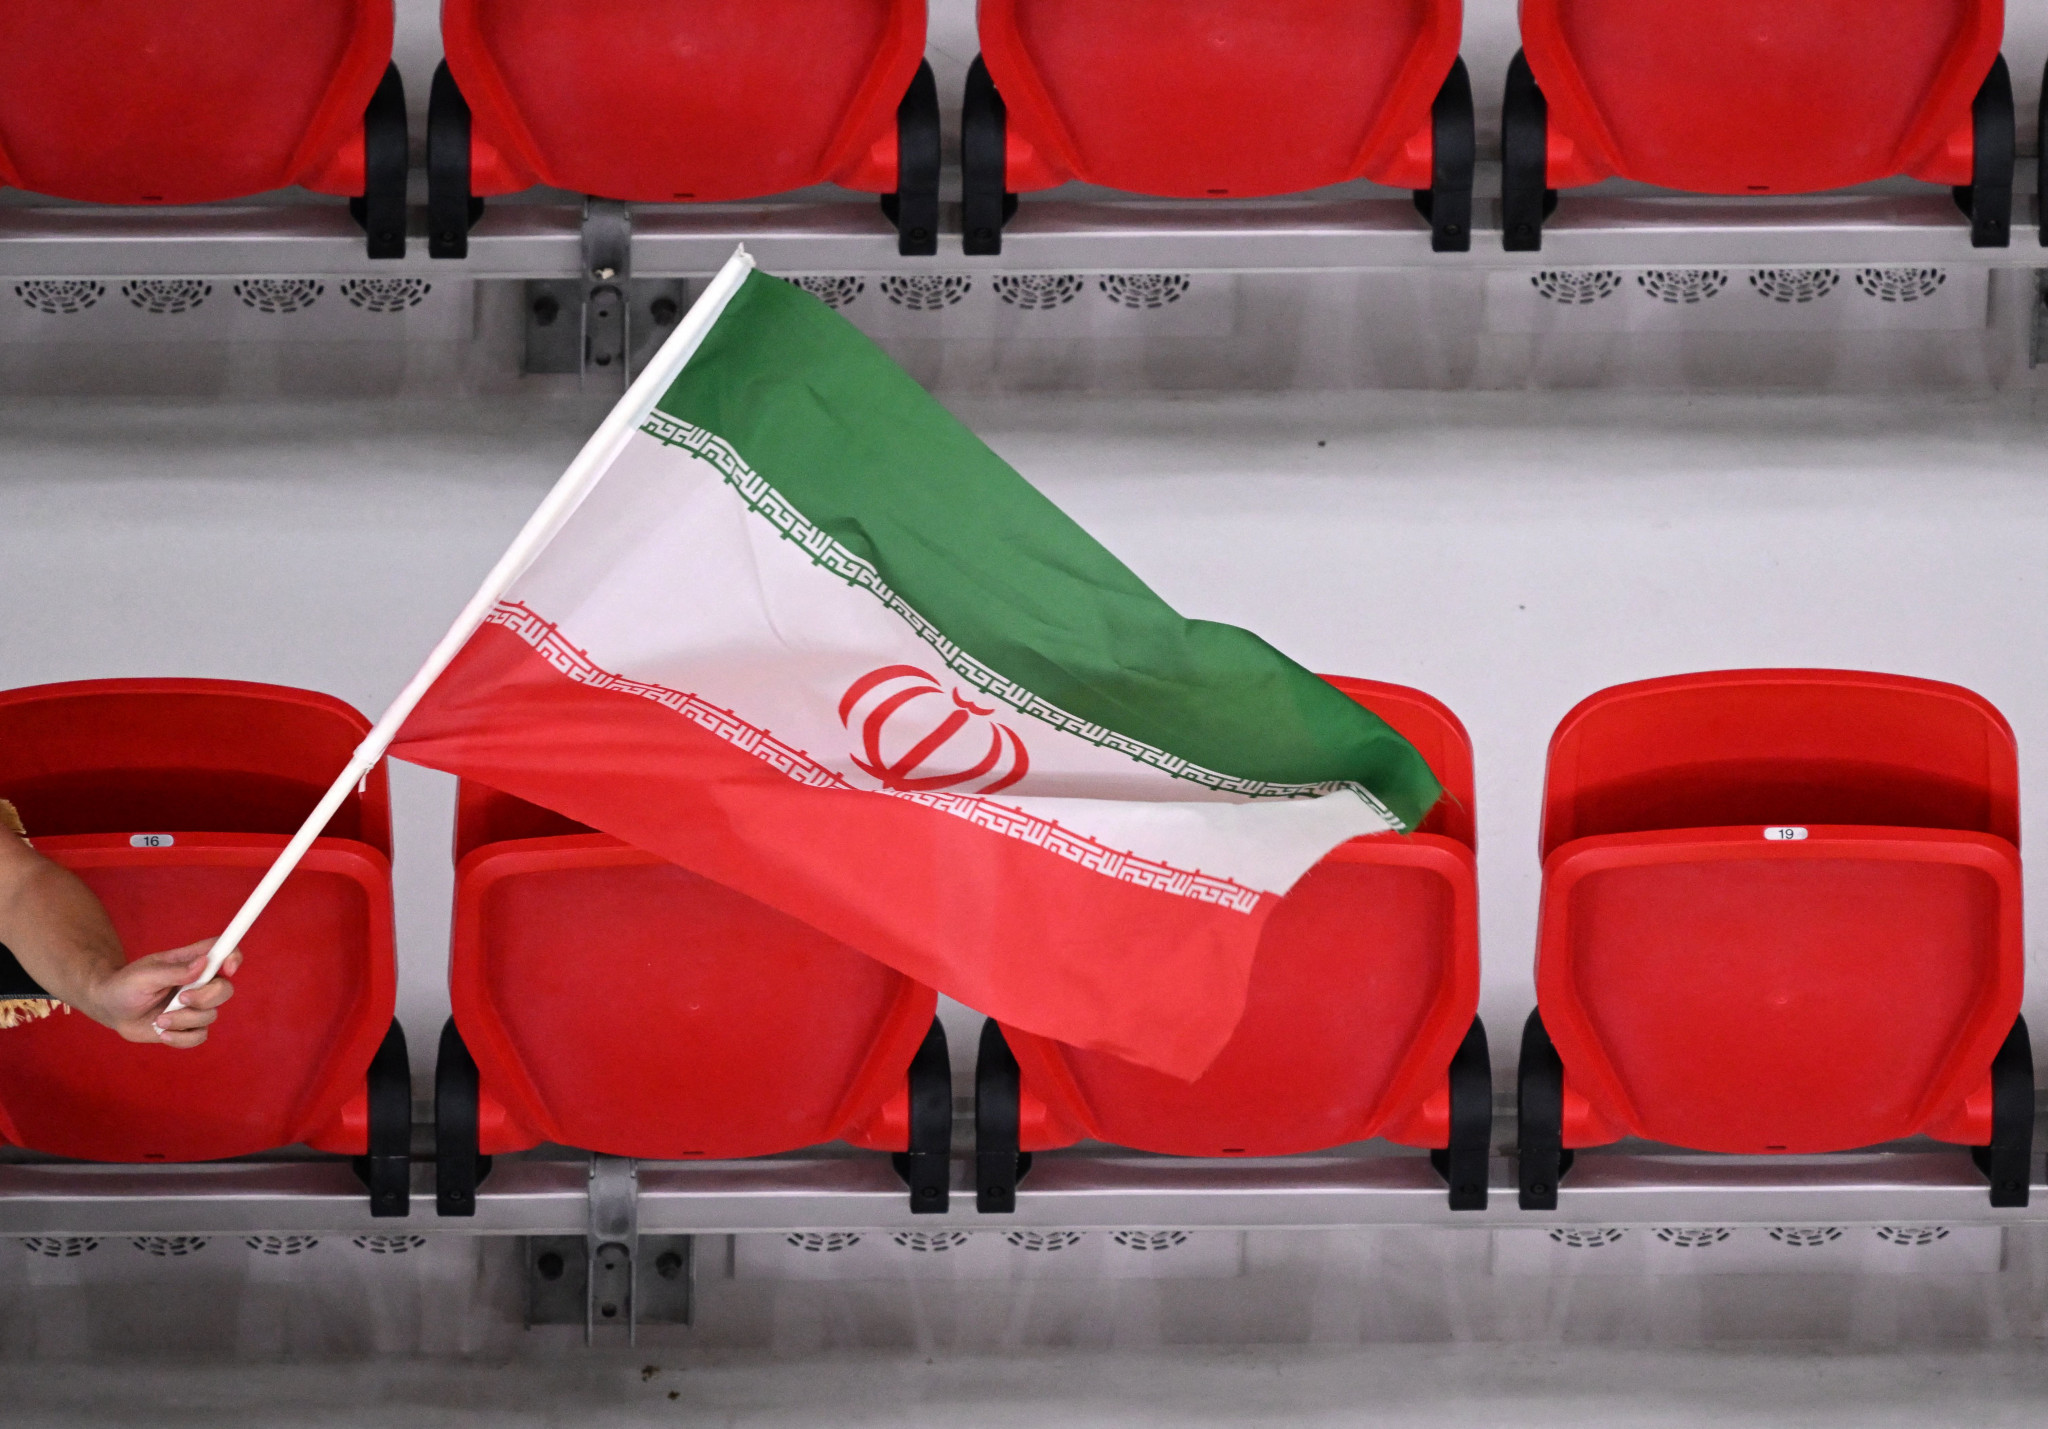 Second Iranian athlete provisionally suspended for failed doping test before World Taekwondo Championships